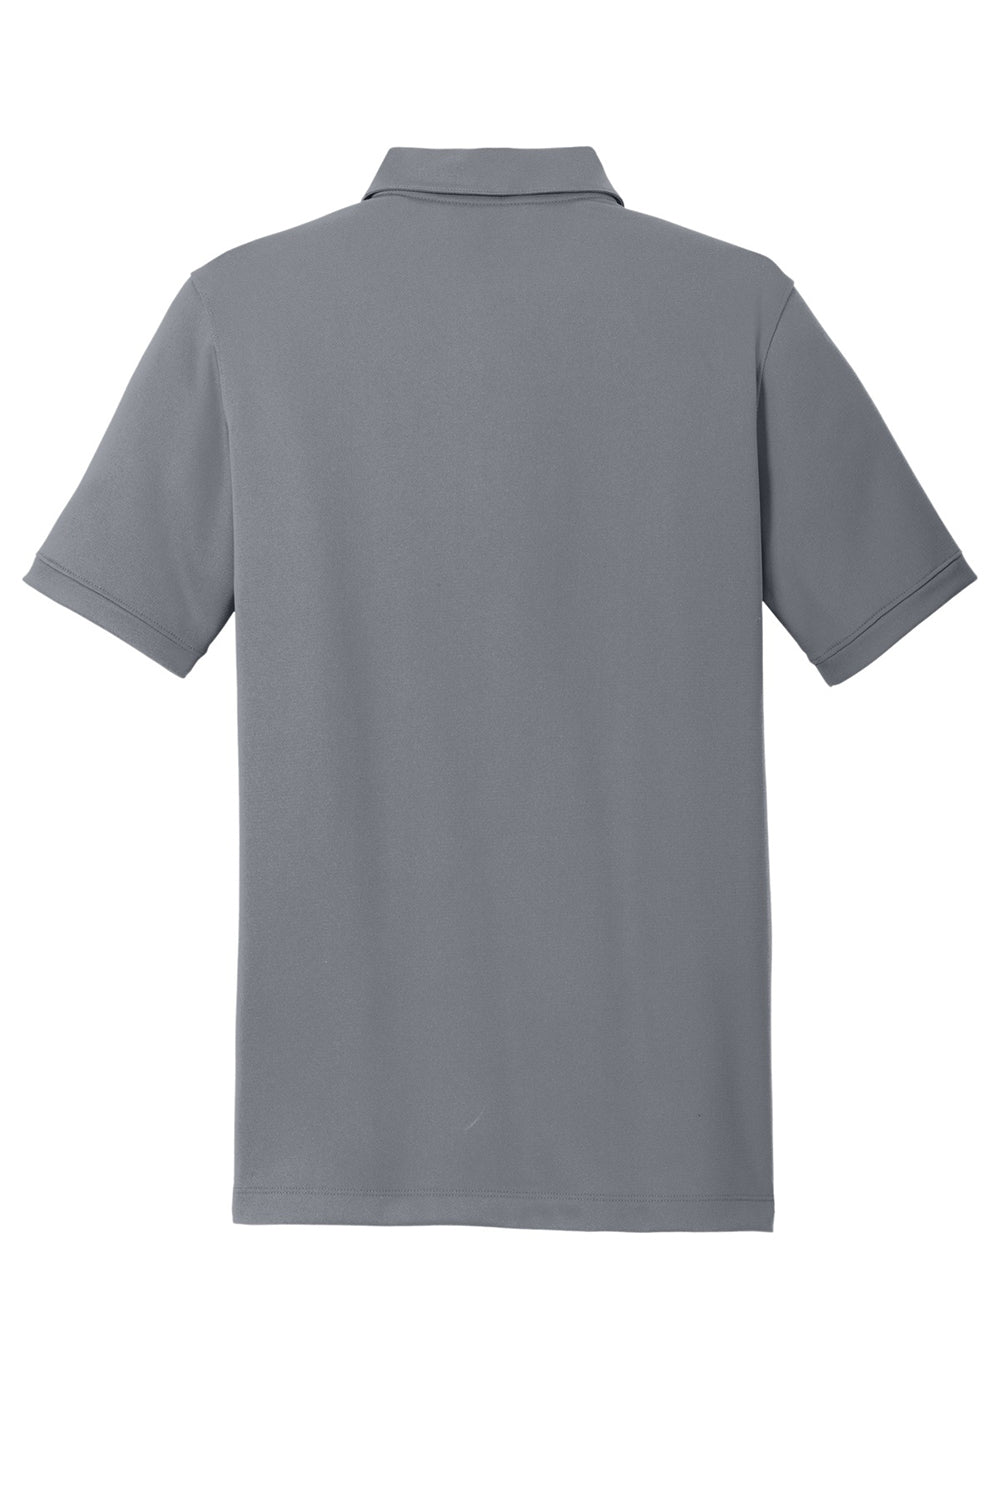 Nike 746099 Mens Icon Dri-Fit Moisture Wicking Short Sleeve Polo Shirt Dark Grey Flat Back